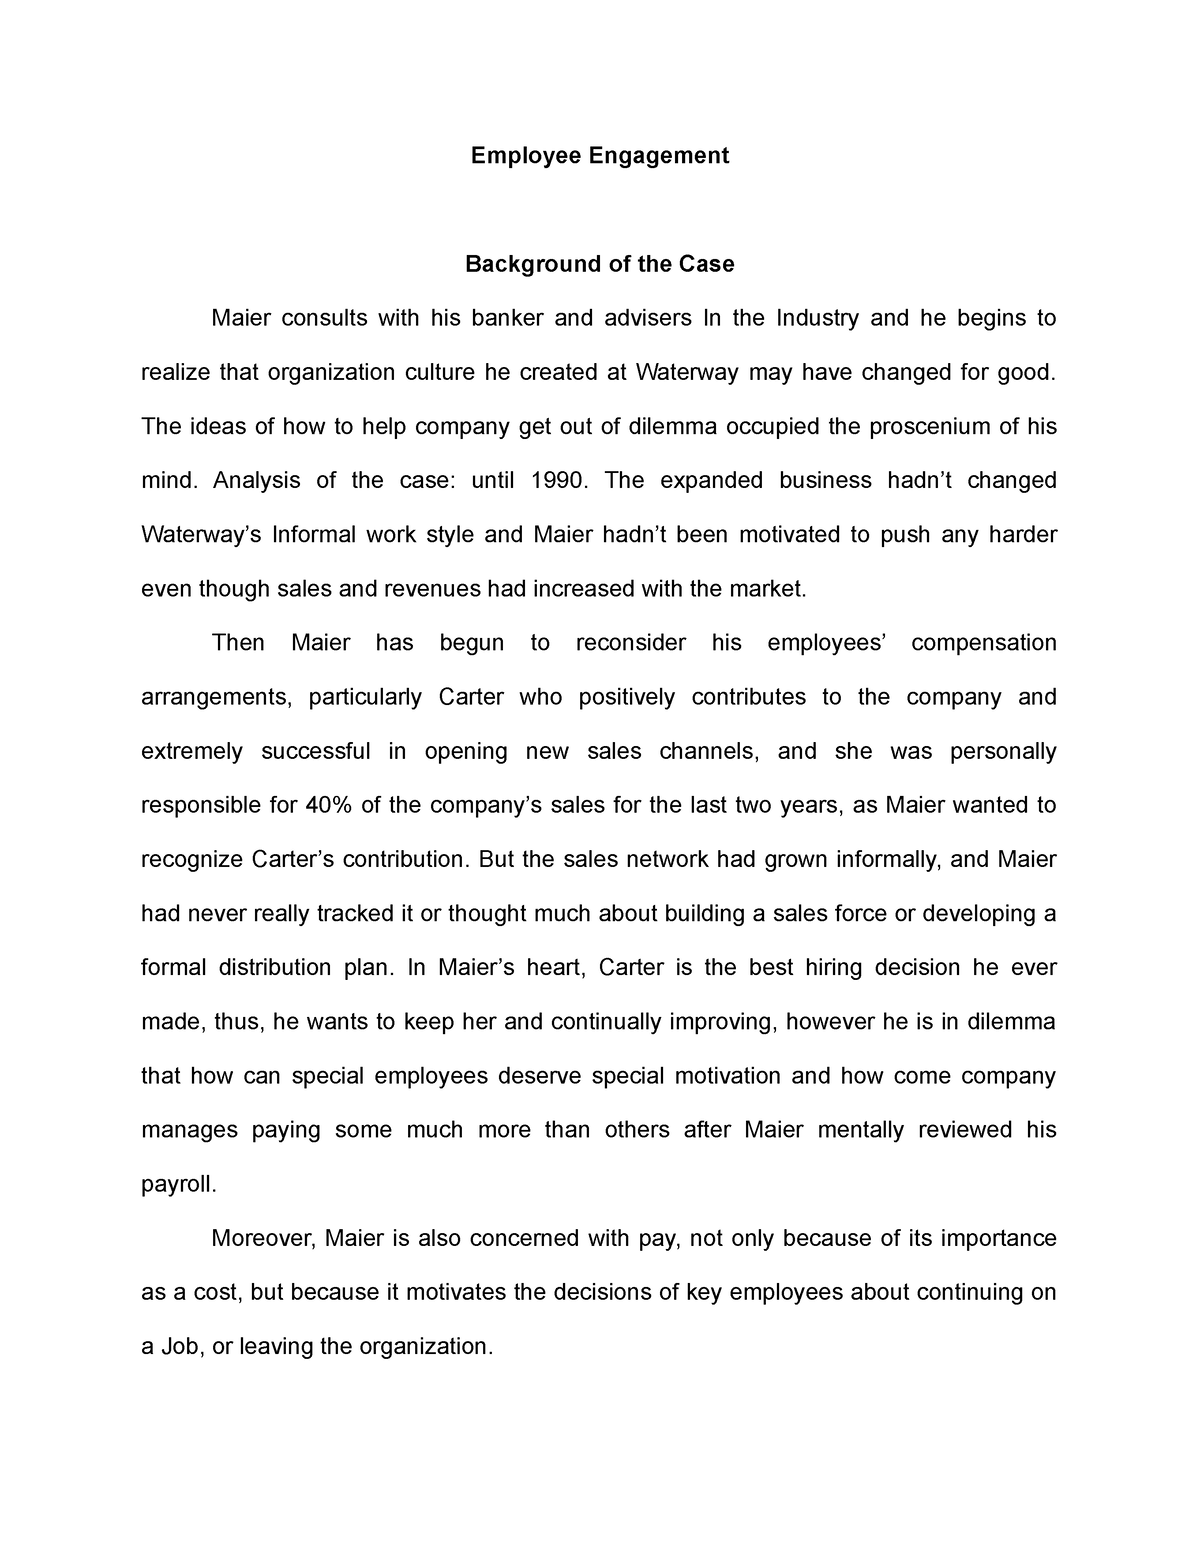 human resource management case study assignment